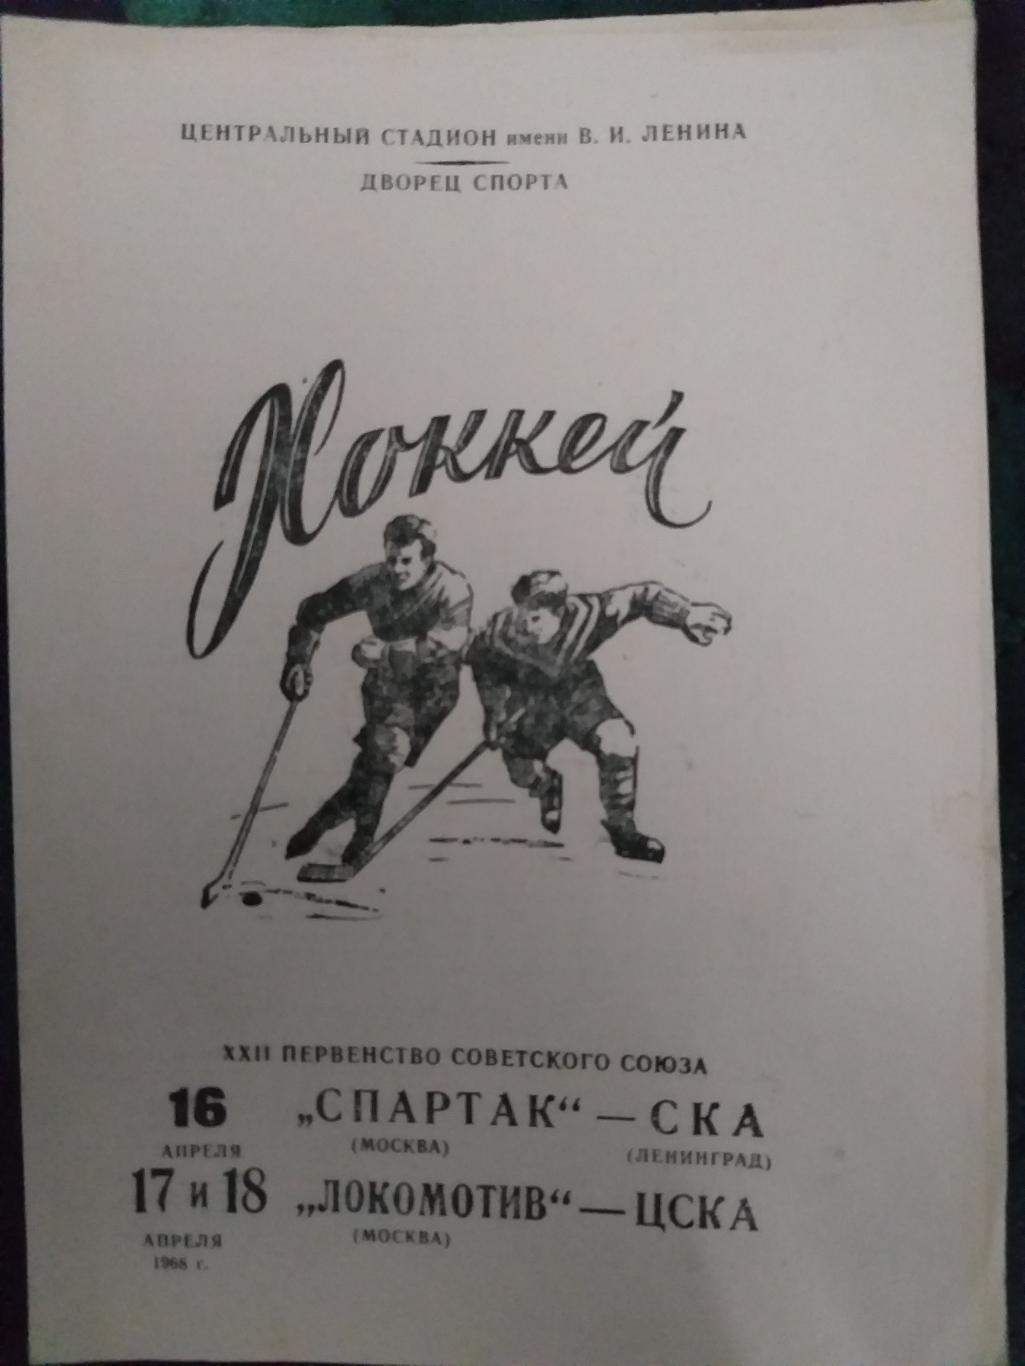 Спартак-СКА+ Локомотив-ЦСКА 16,17,18.04.1968